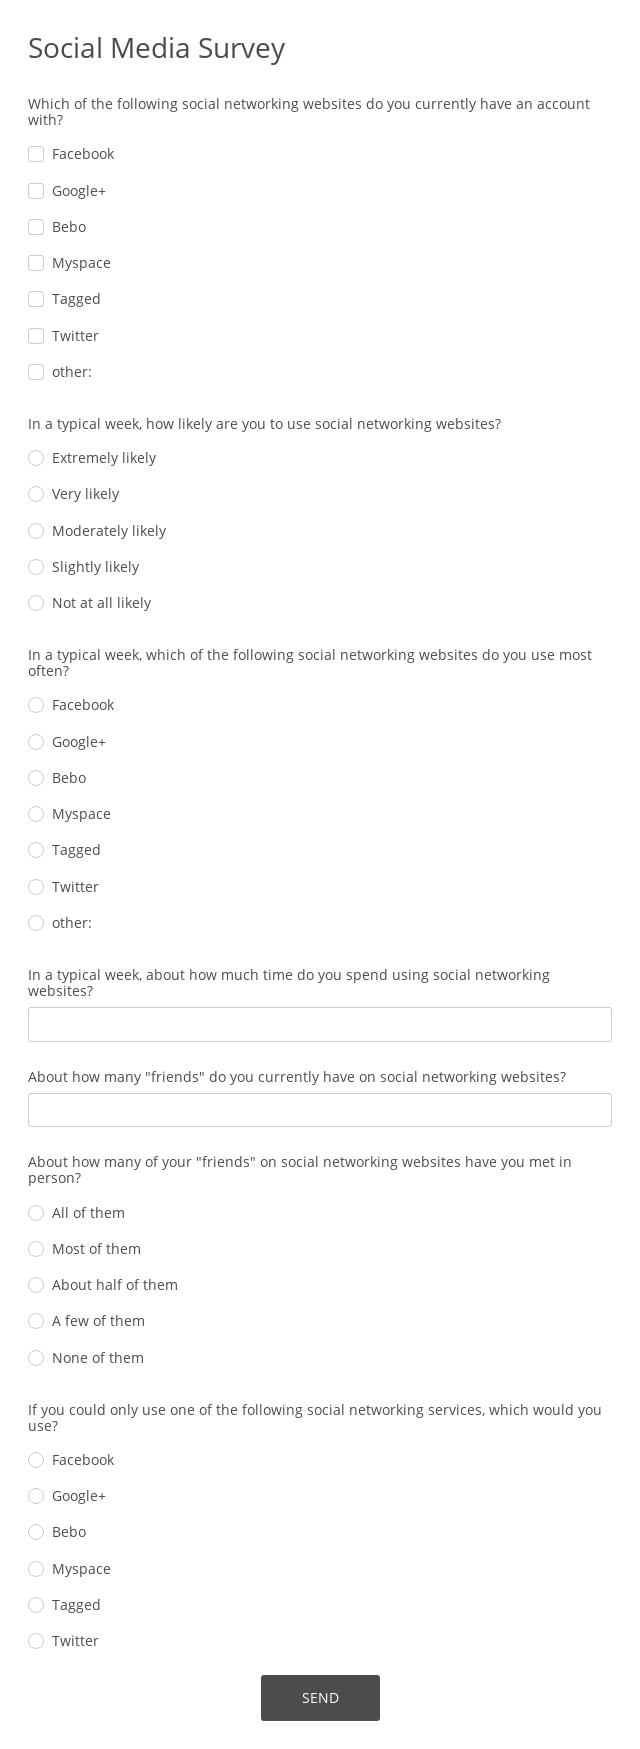 Social Media Survey - Survey Template